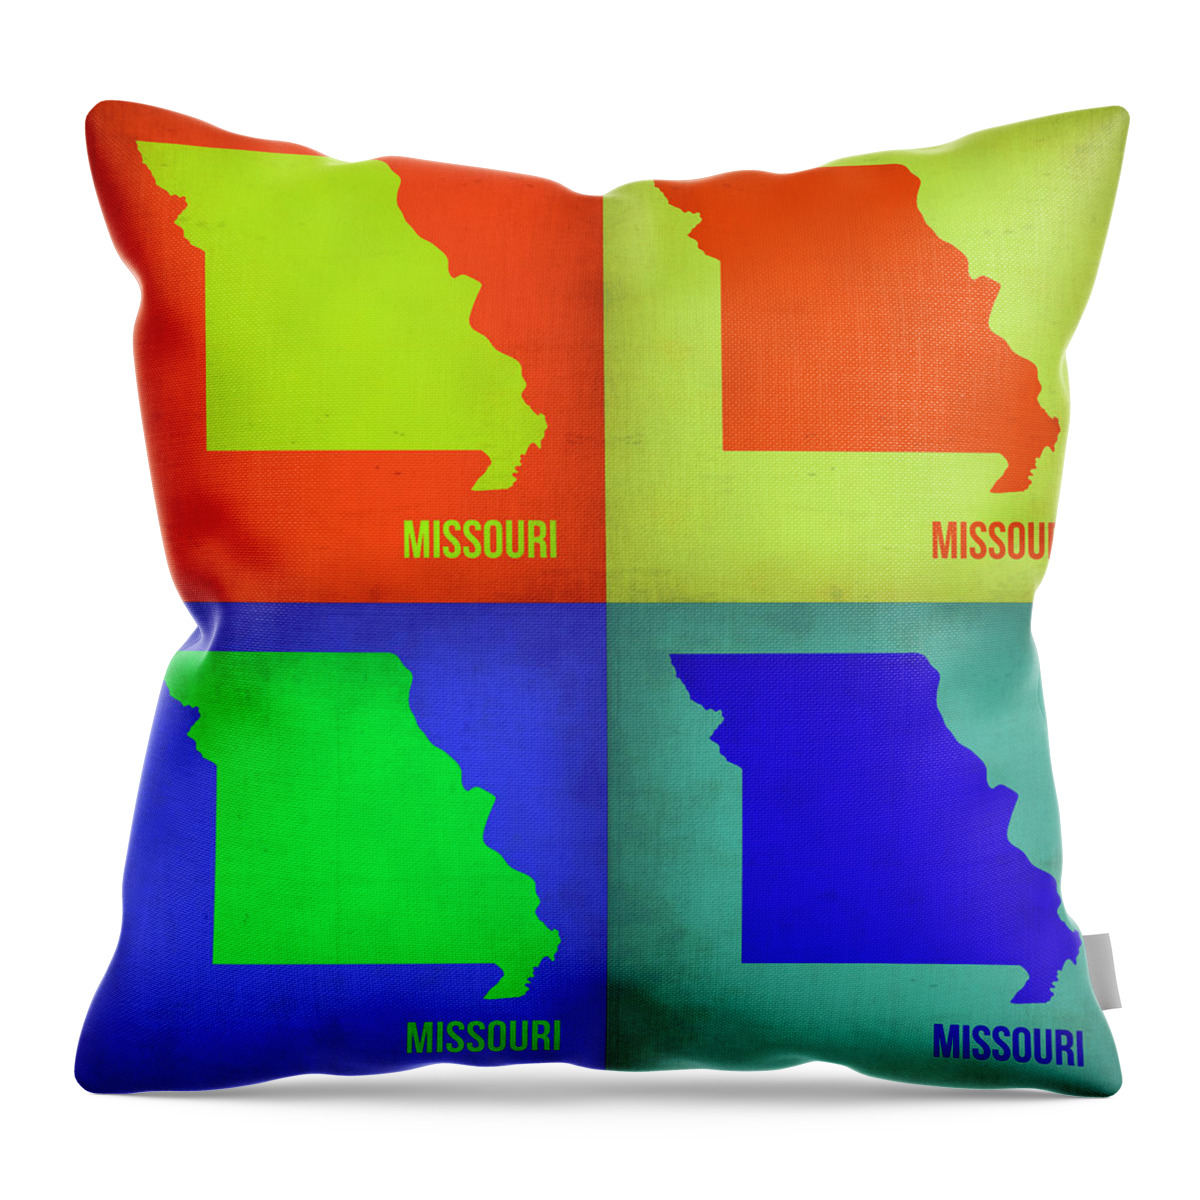 Missouri Map Throw Pillow featuring the painting Missouri Pop Art Map 1 by Naxart Studio